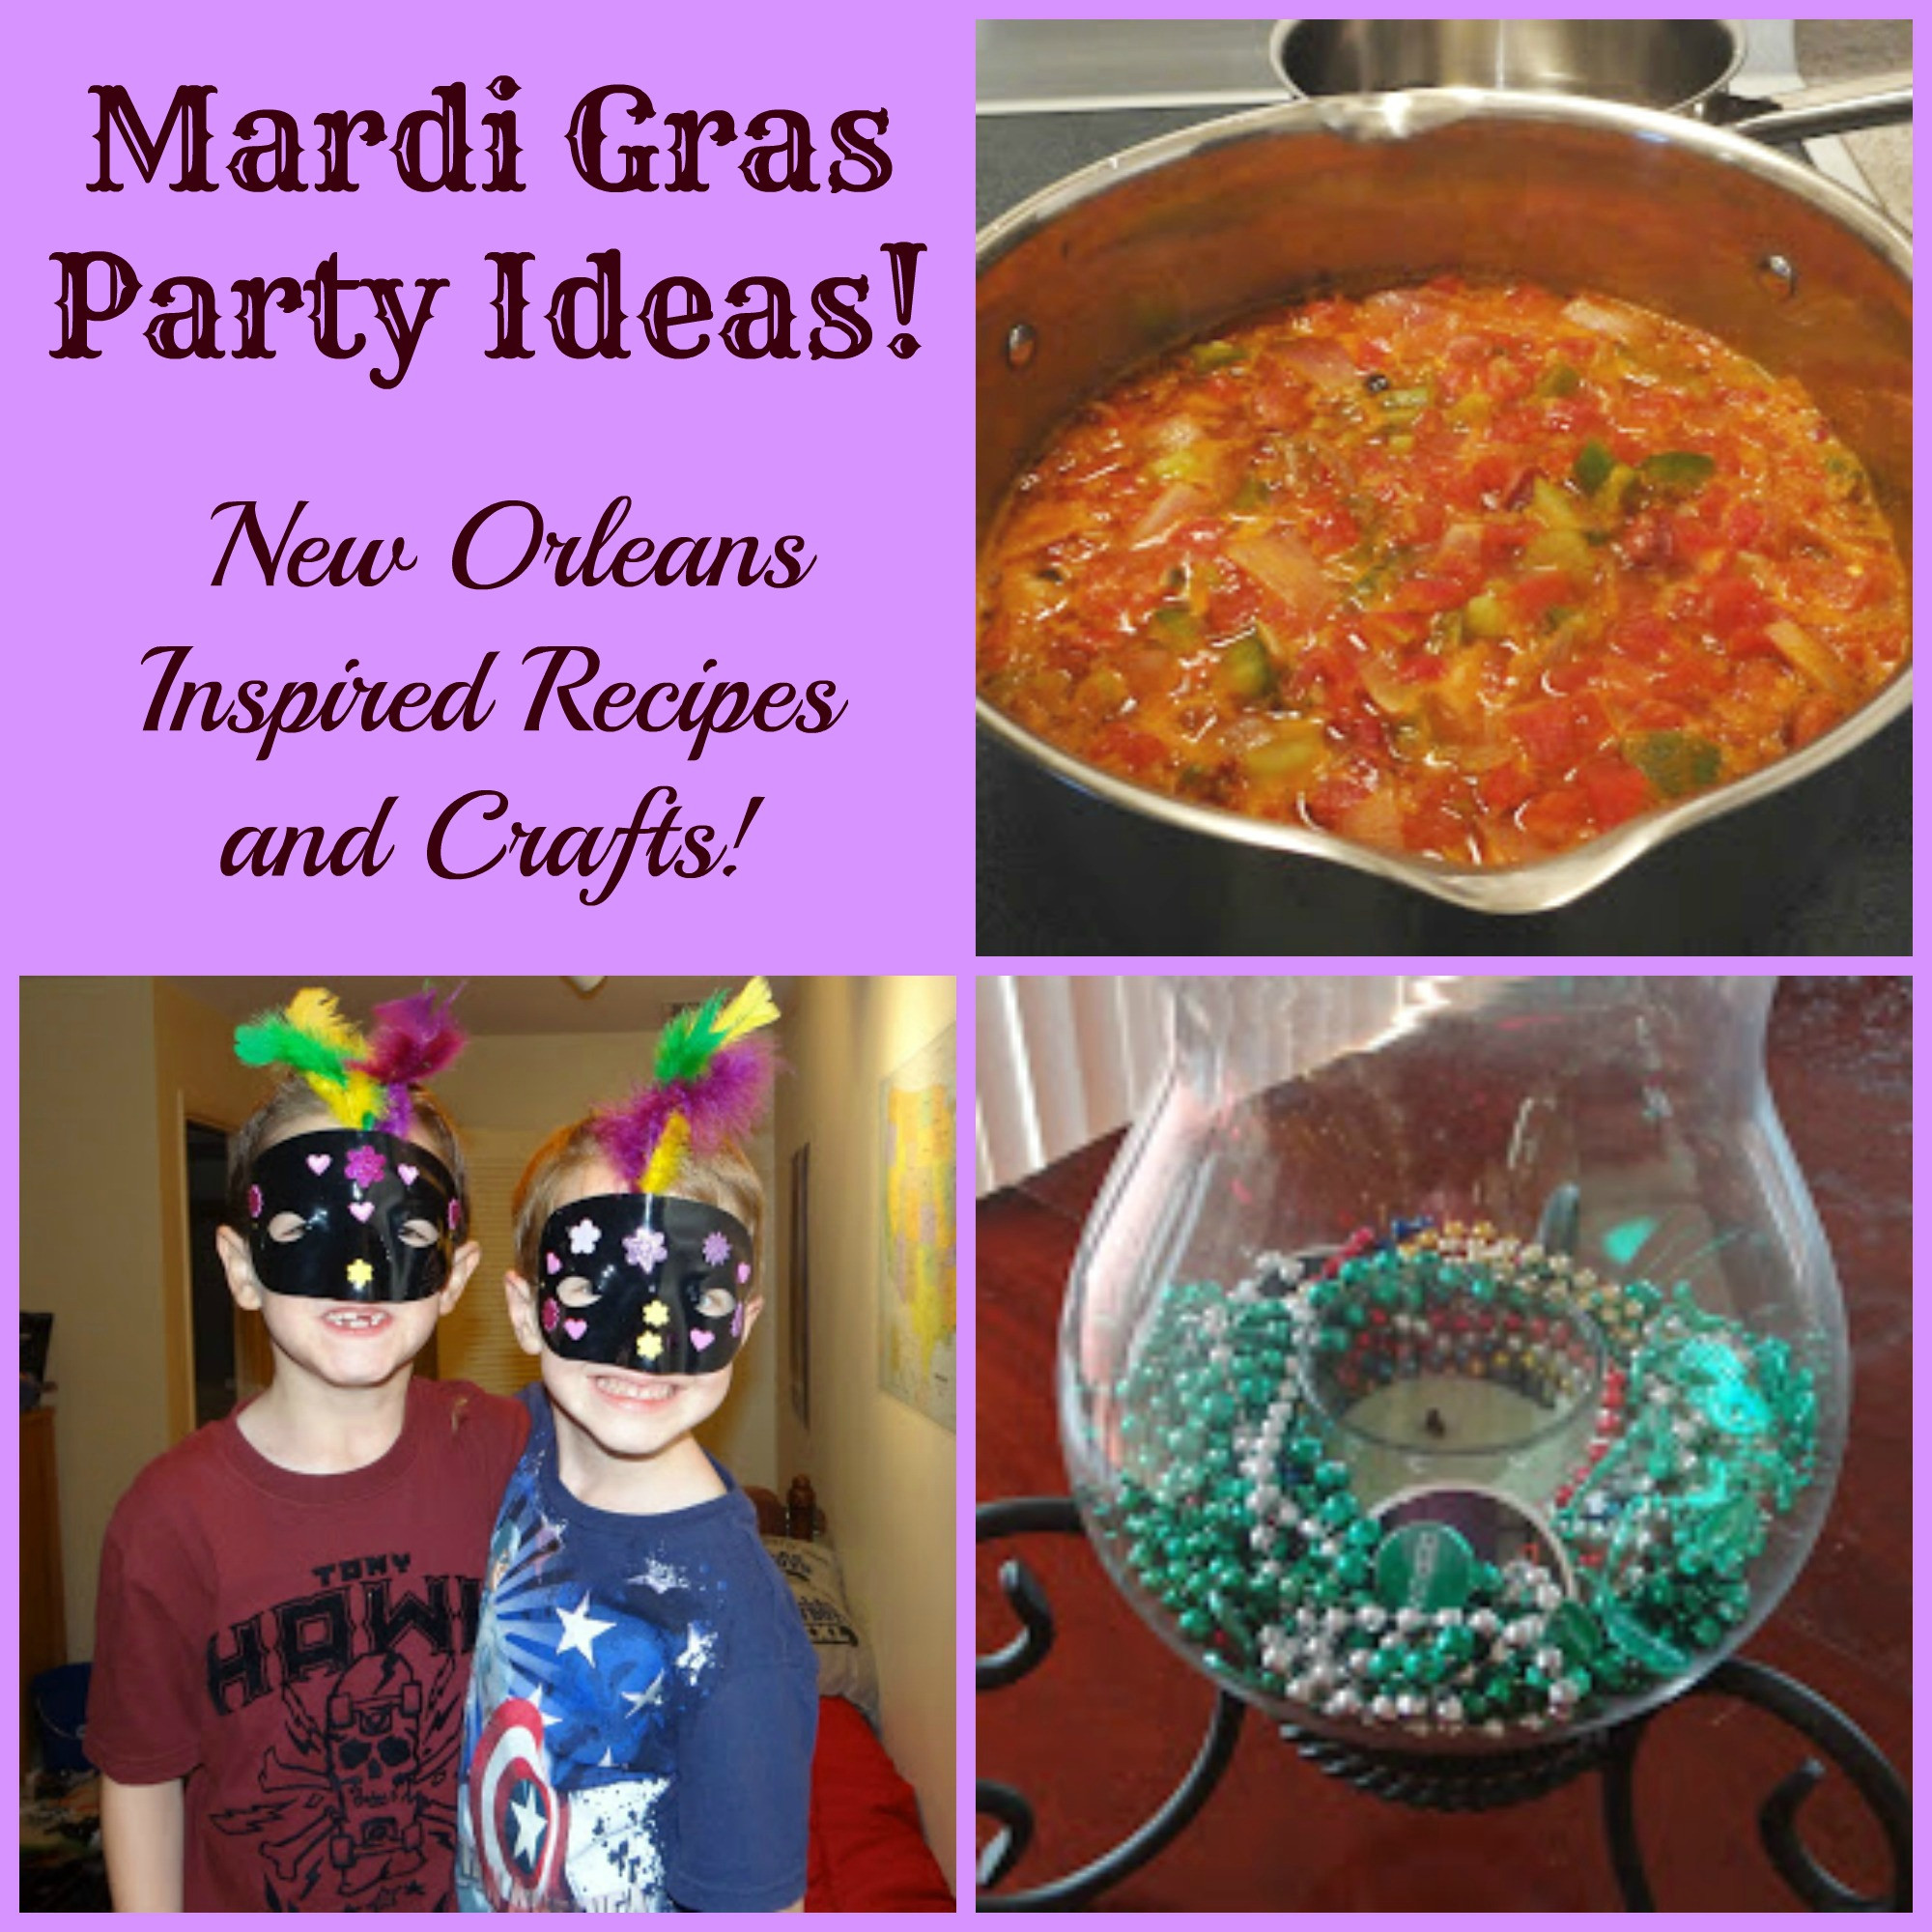 New Orleans Birthday Party Ideas
 Mardi Gras Party Ideas We Made New Orleans Inspired